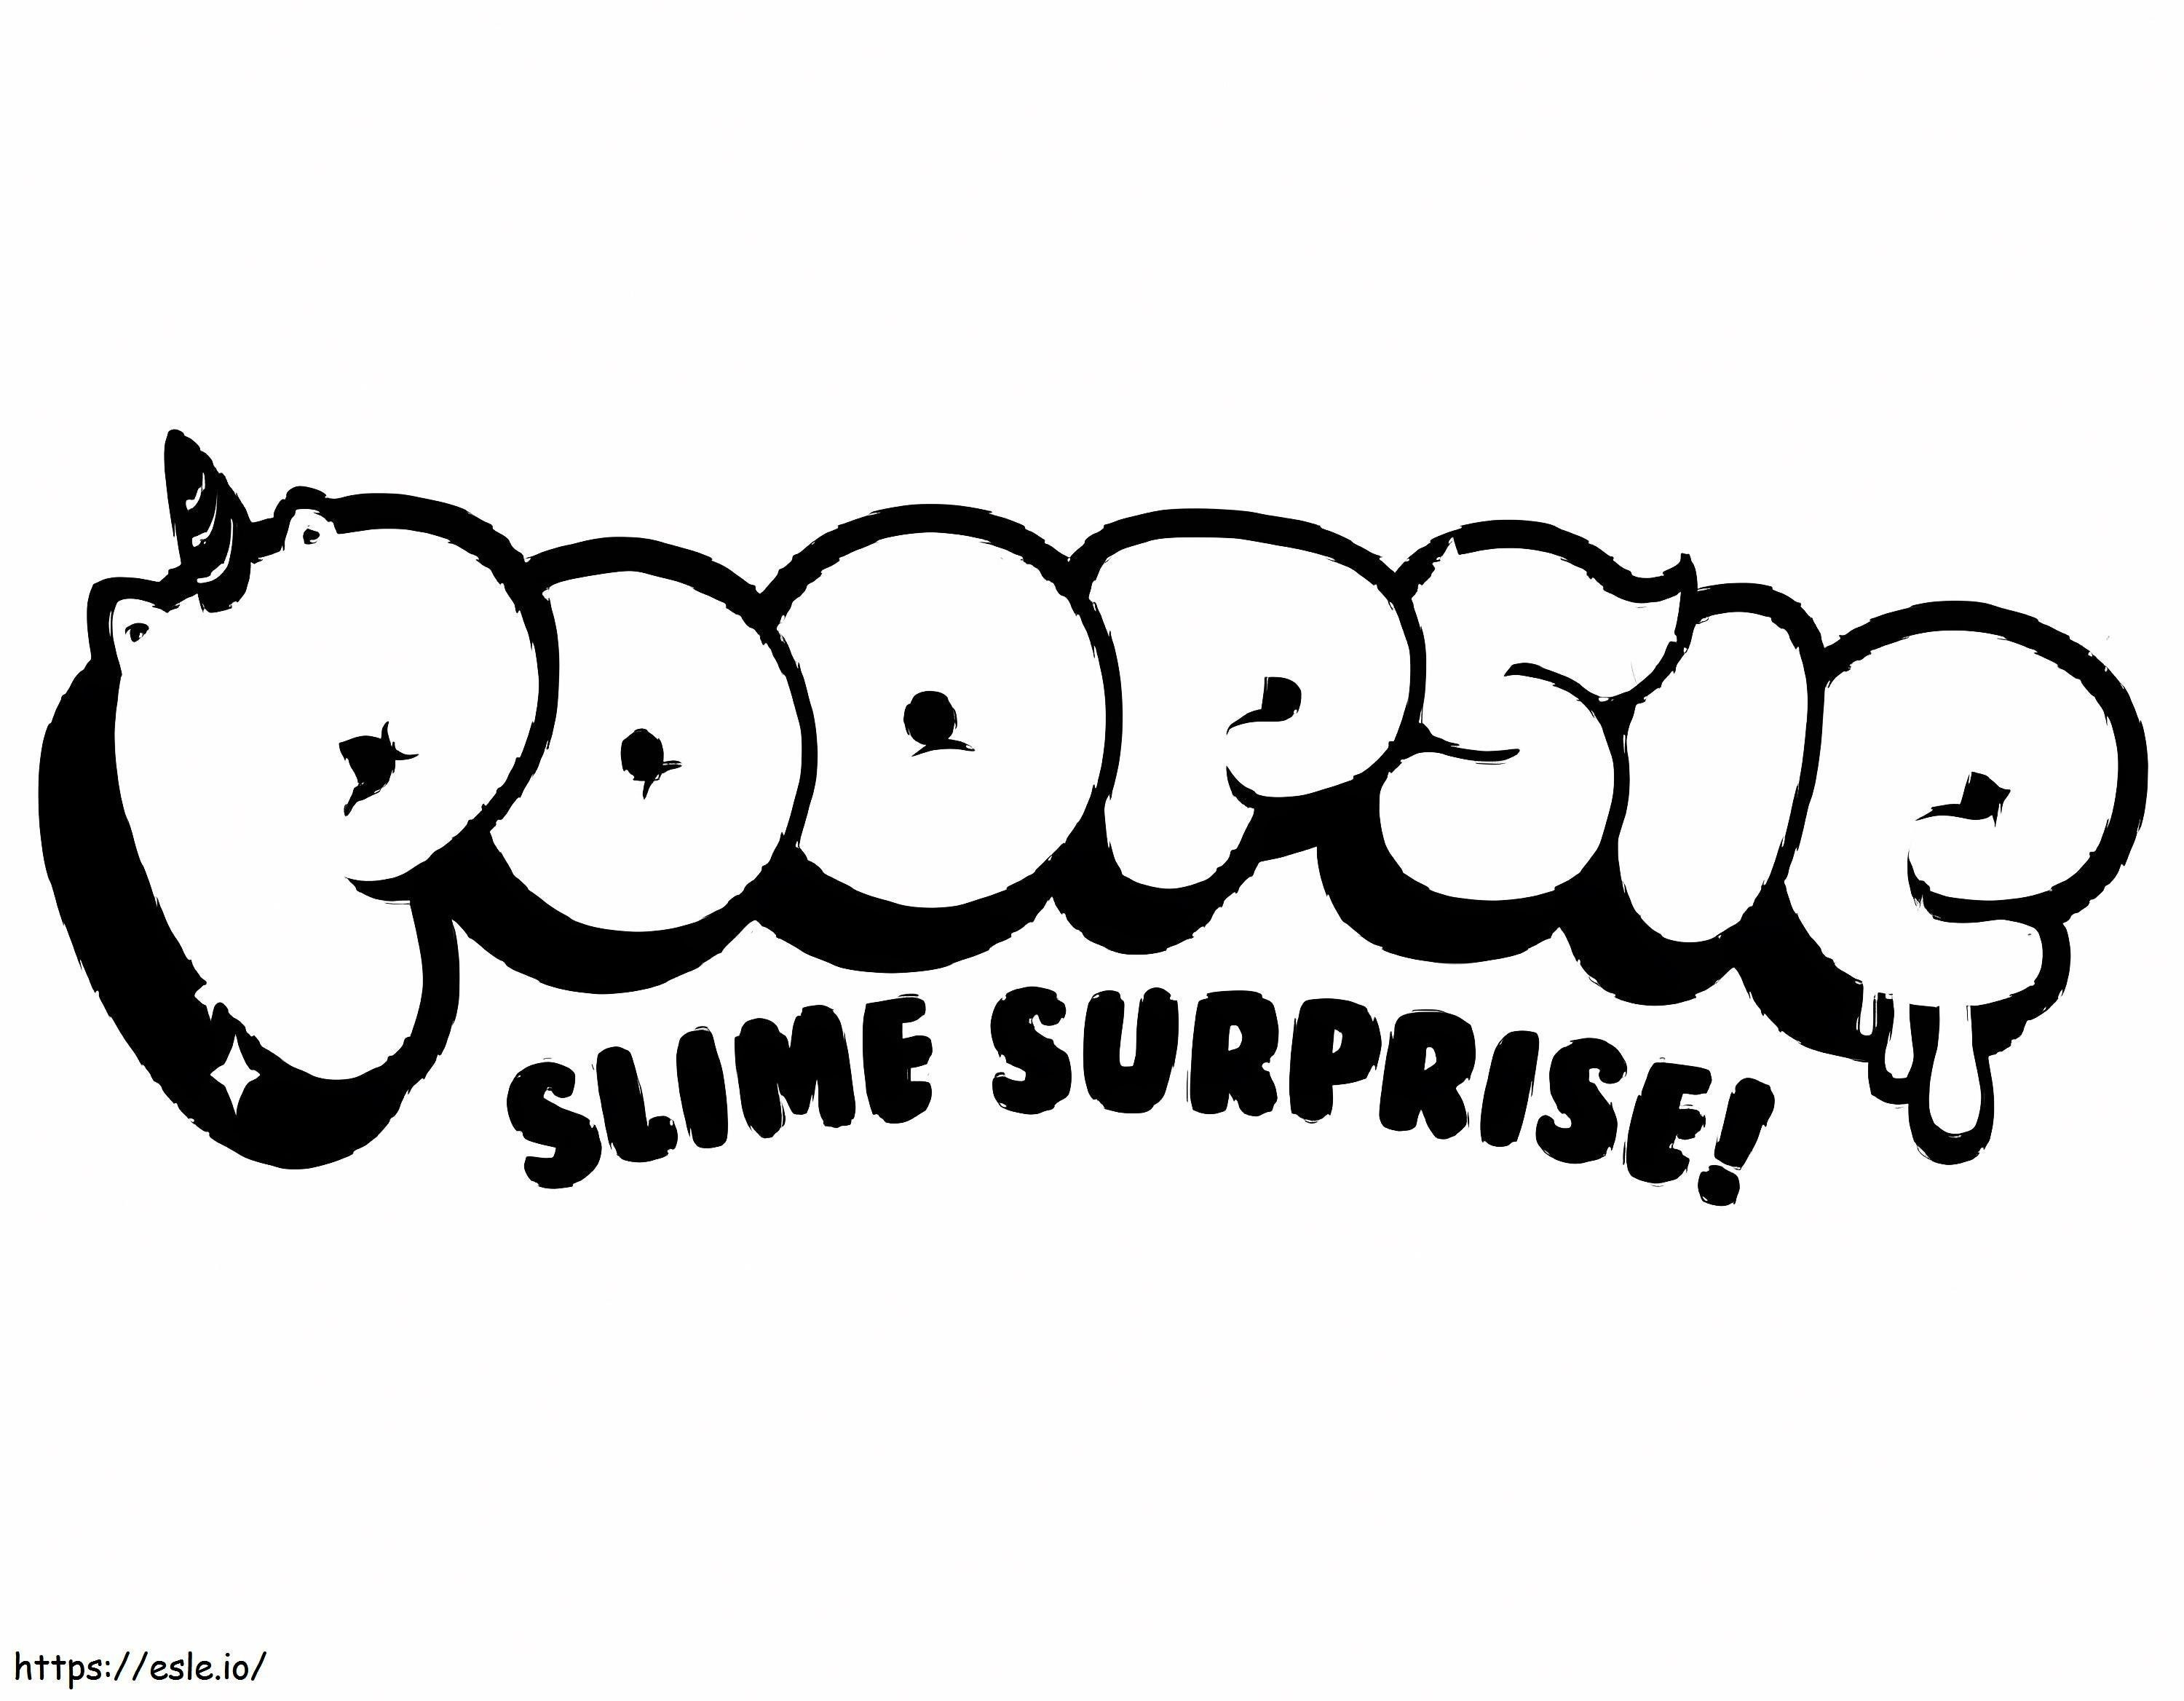 Poopsie Slime Sürpriz Logosu boyama